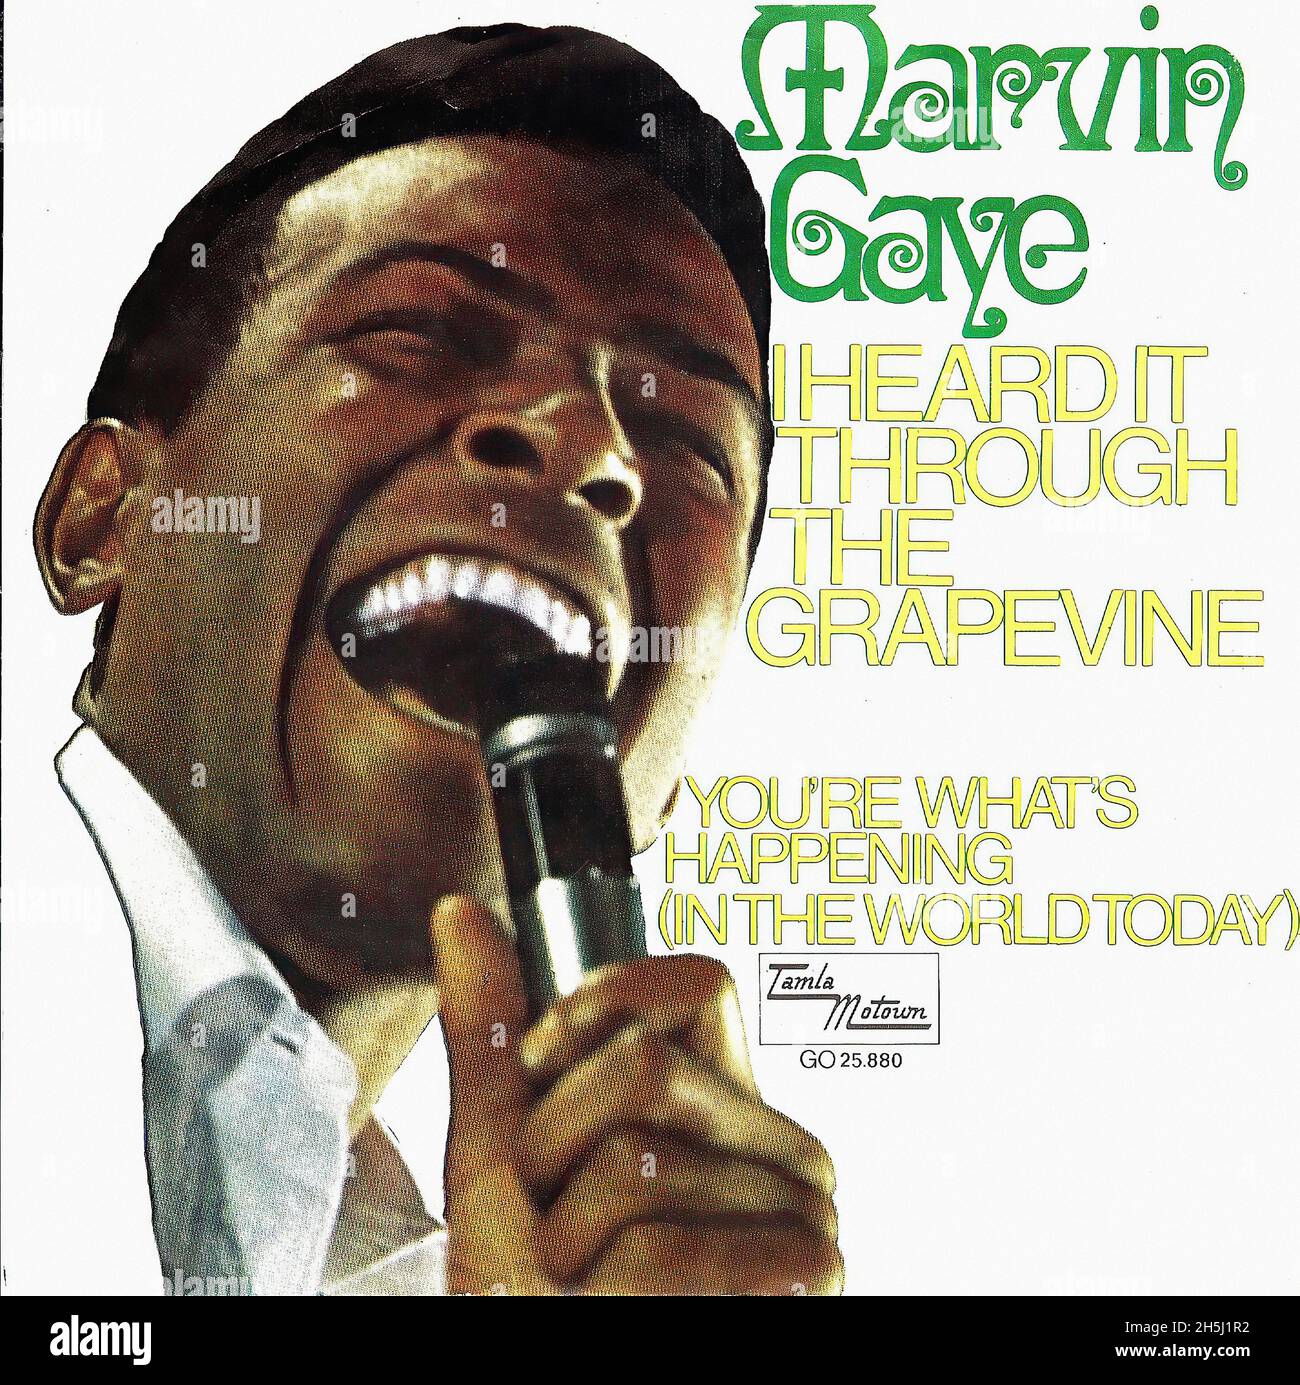 GAYE,MARVIN - I Heard It Through The Grapevine Vinyl LP